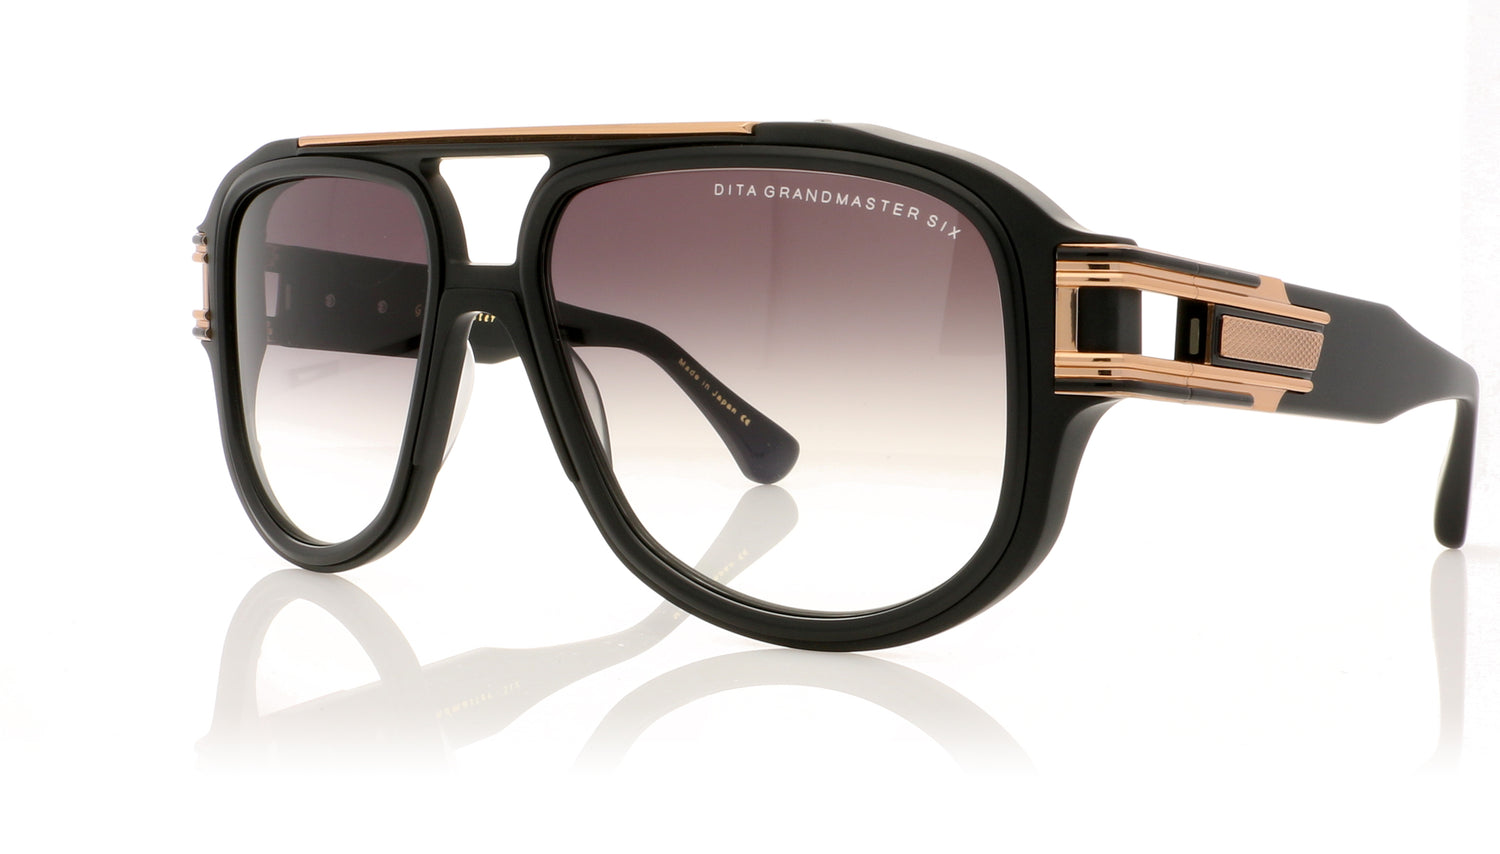 DITA Grandmaster Six DTS900 2 Matte Black Sunglasses - Angle